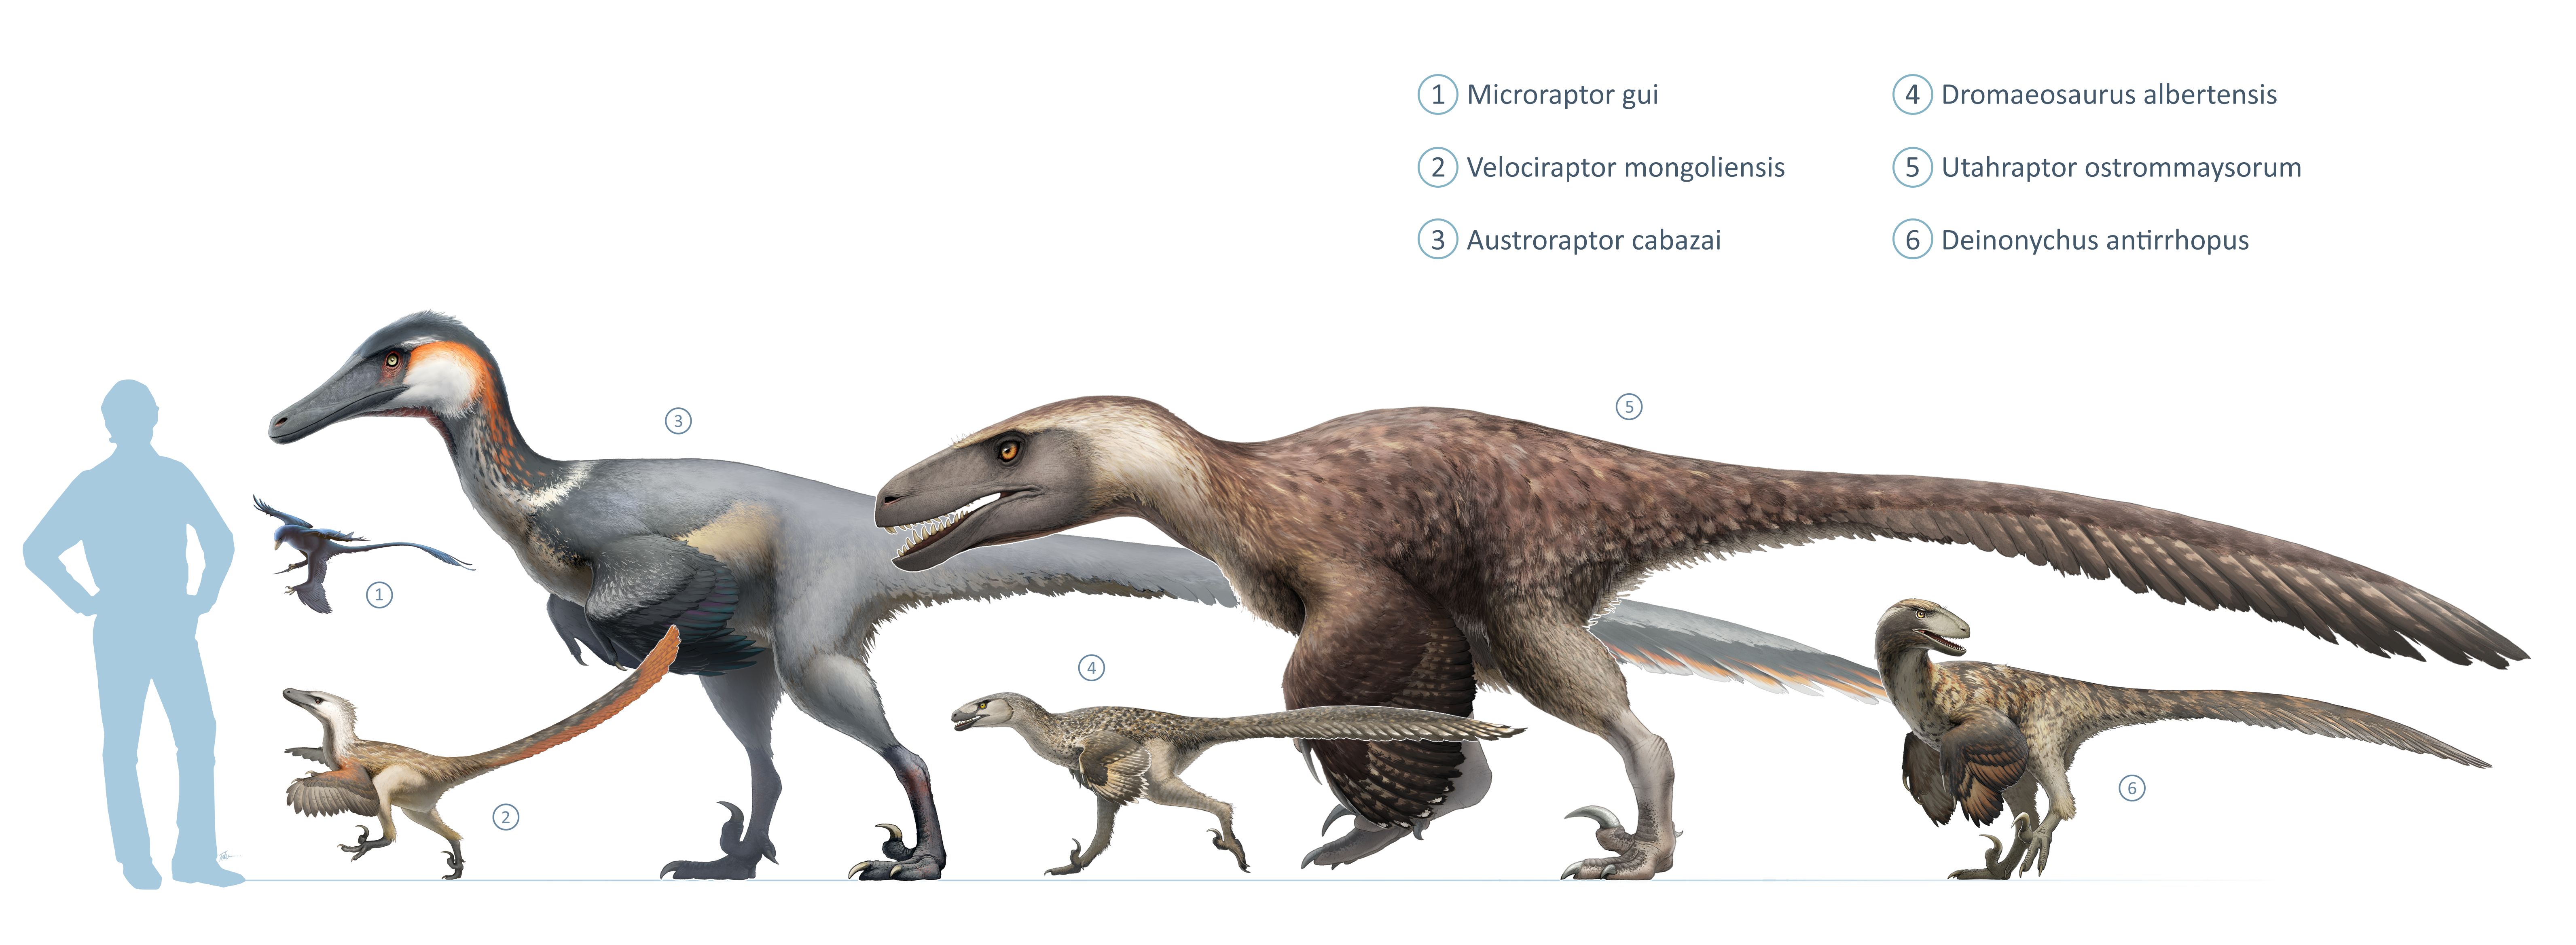 File:Dromaeosaurs.png - Wikimedia Commons